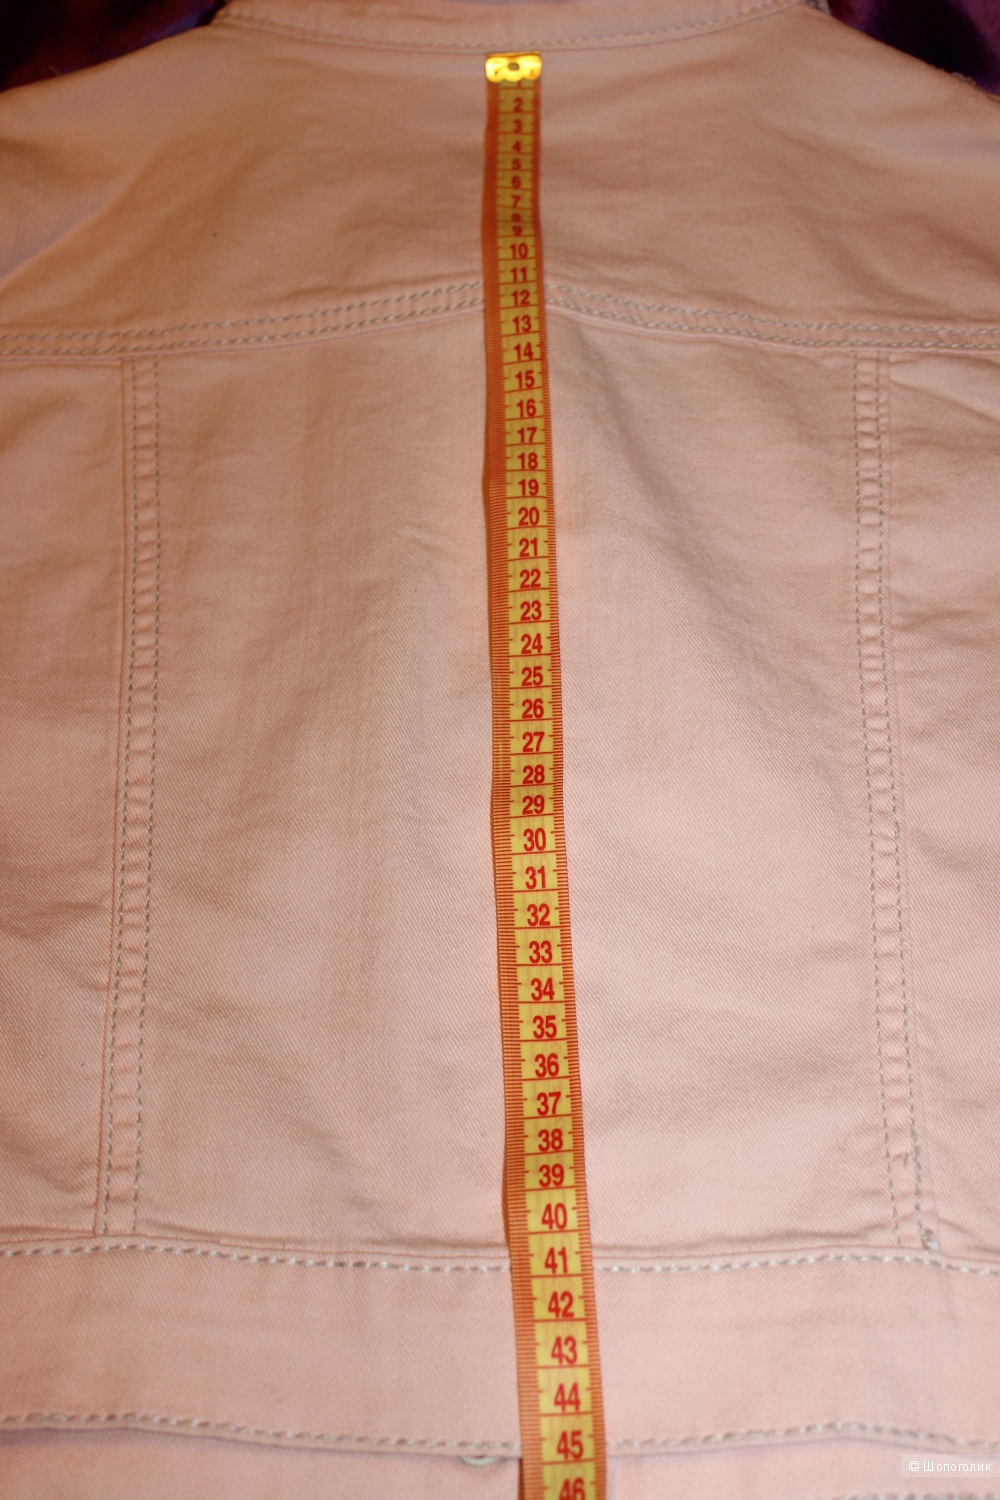 Новая джинсовая куртка MISS ME. размер L. Цвет пудровый-розовый.